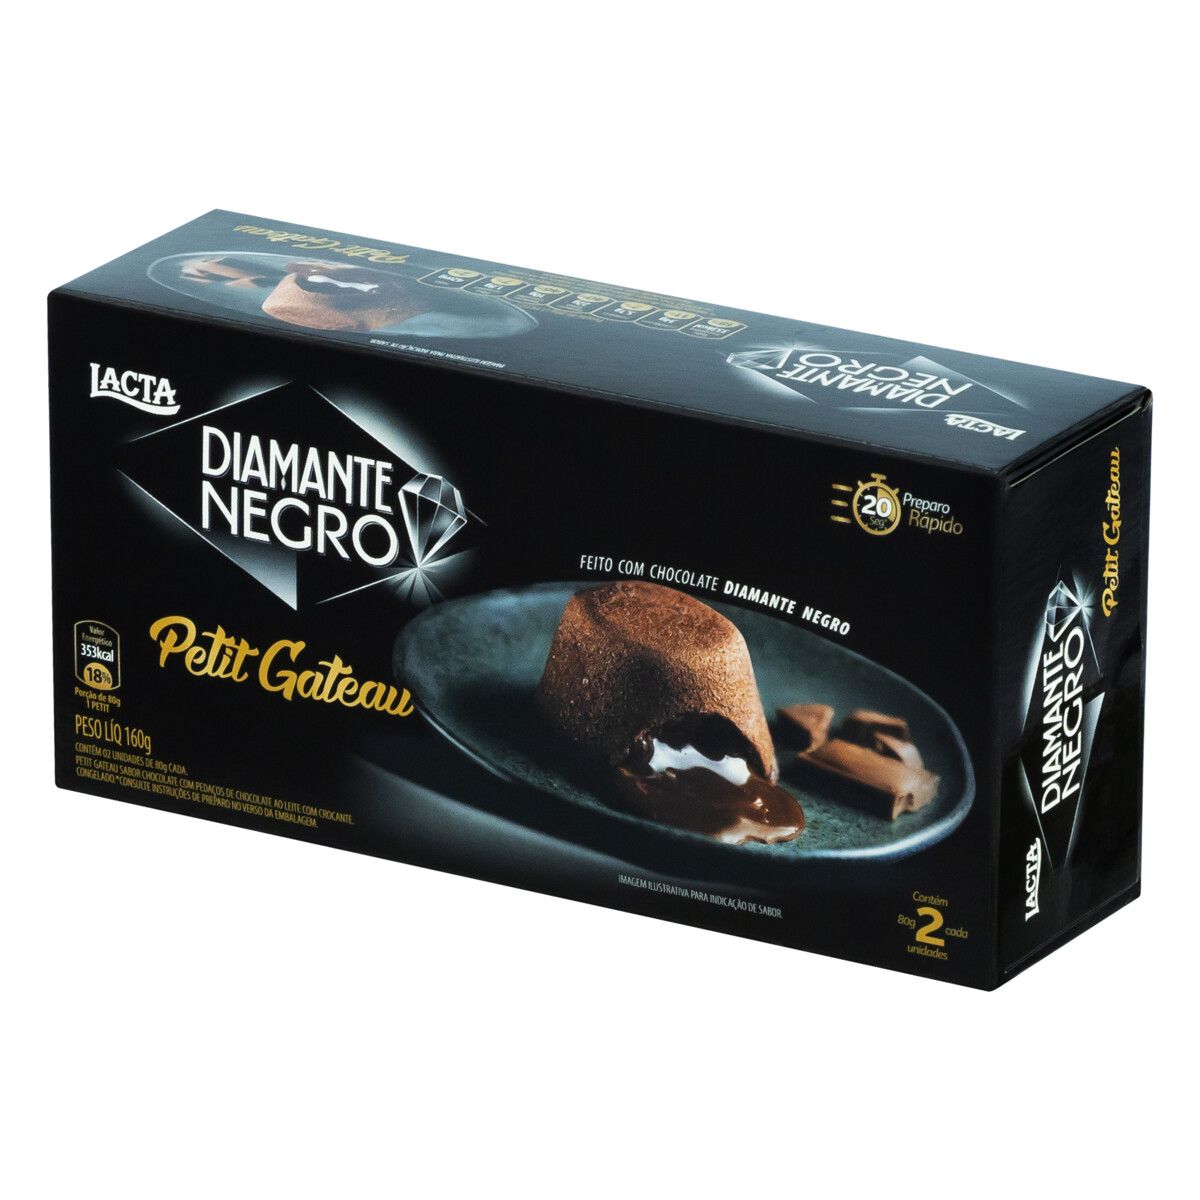 Petit Gâteau Congelado Chocolate Recheio Diamante Negro Lacta Caixa 160g 2 Unidades image number 3